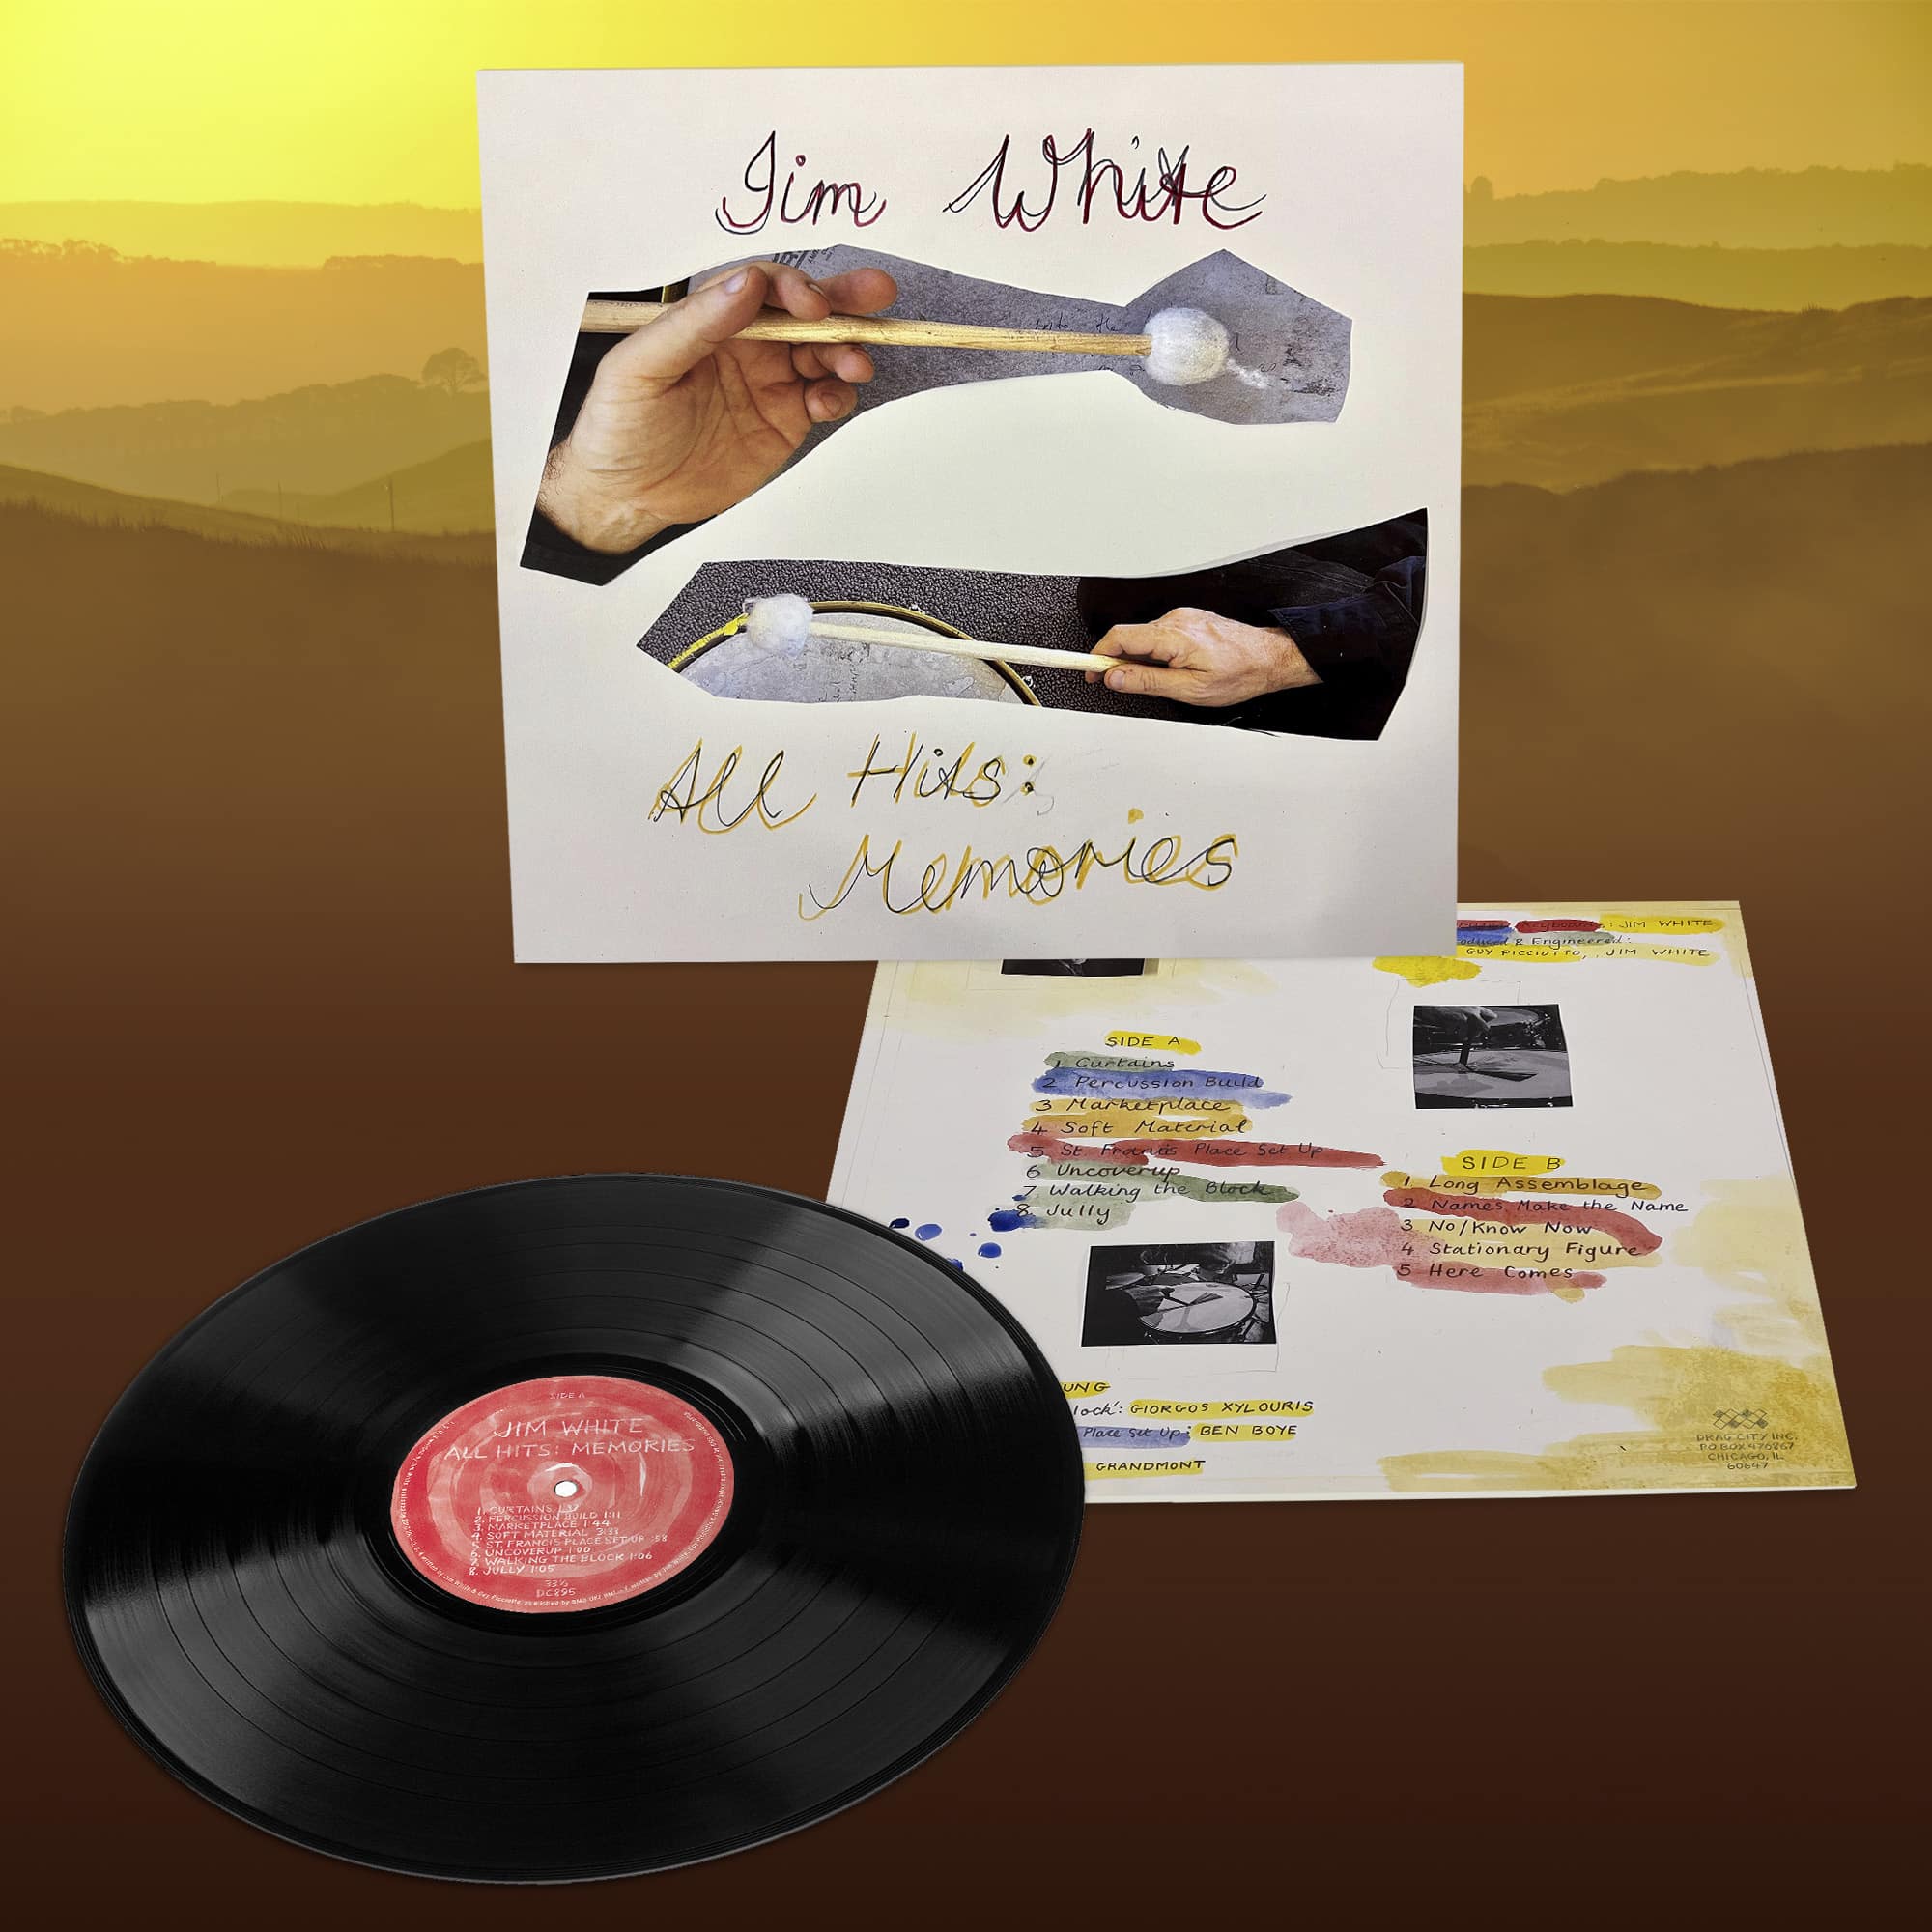 Jim White - All Hits: Memories